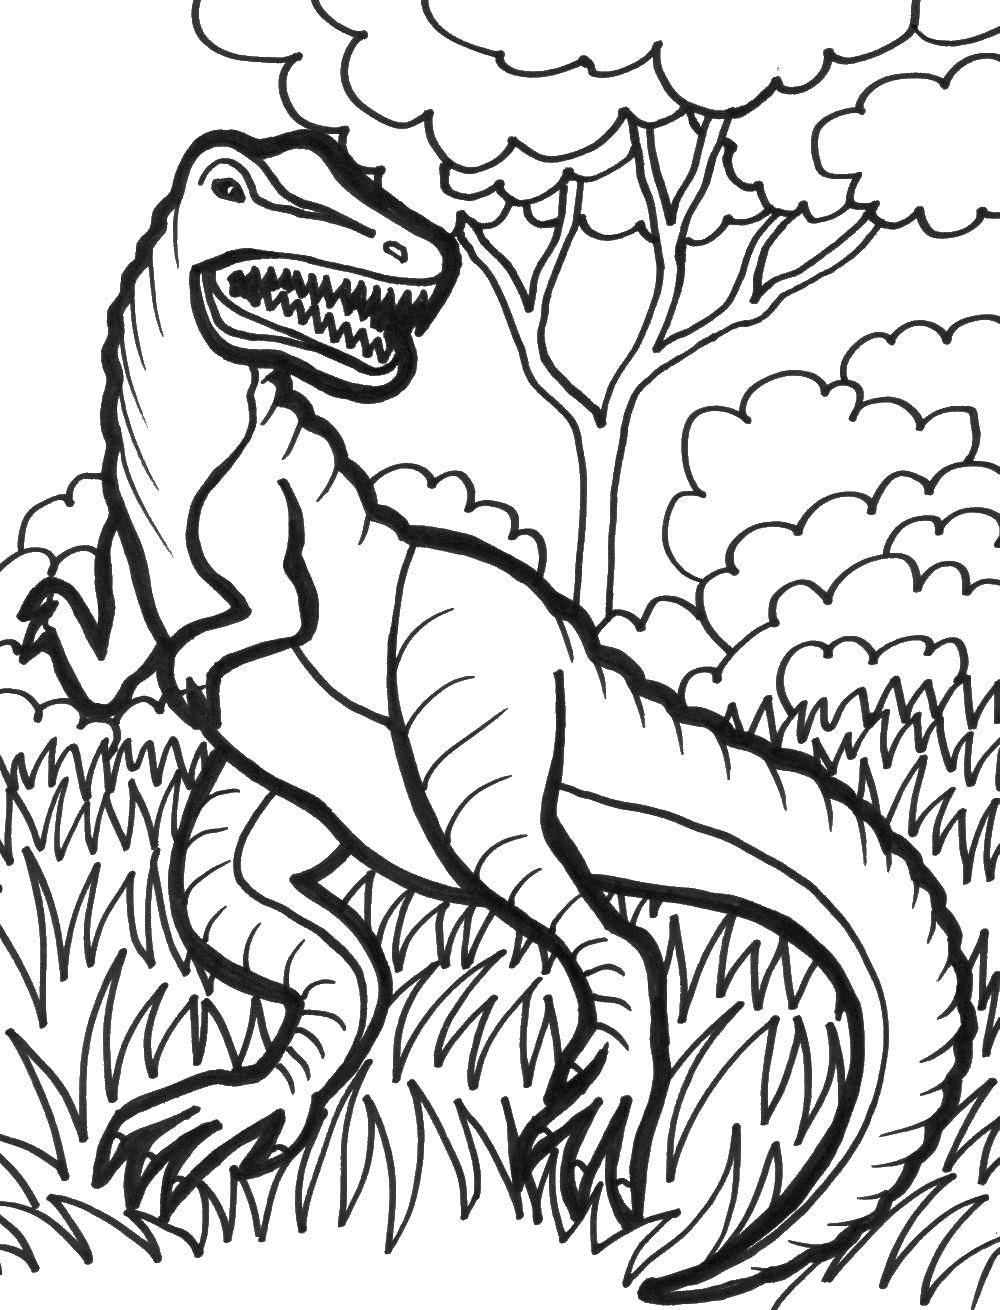 Coloring Dinosaur. Category Jurassic Park. Tags:  nature, dinosaur.